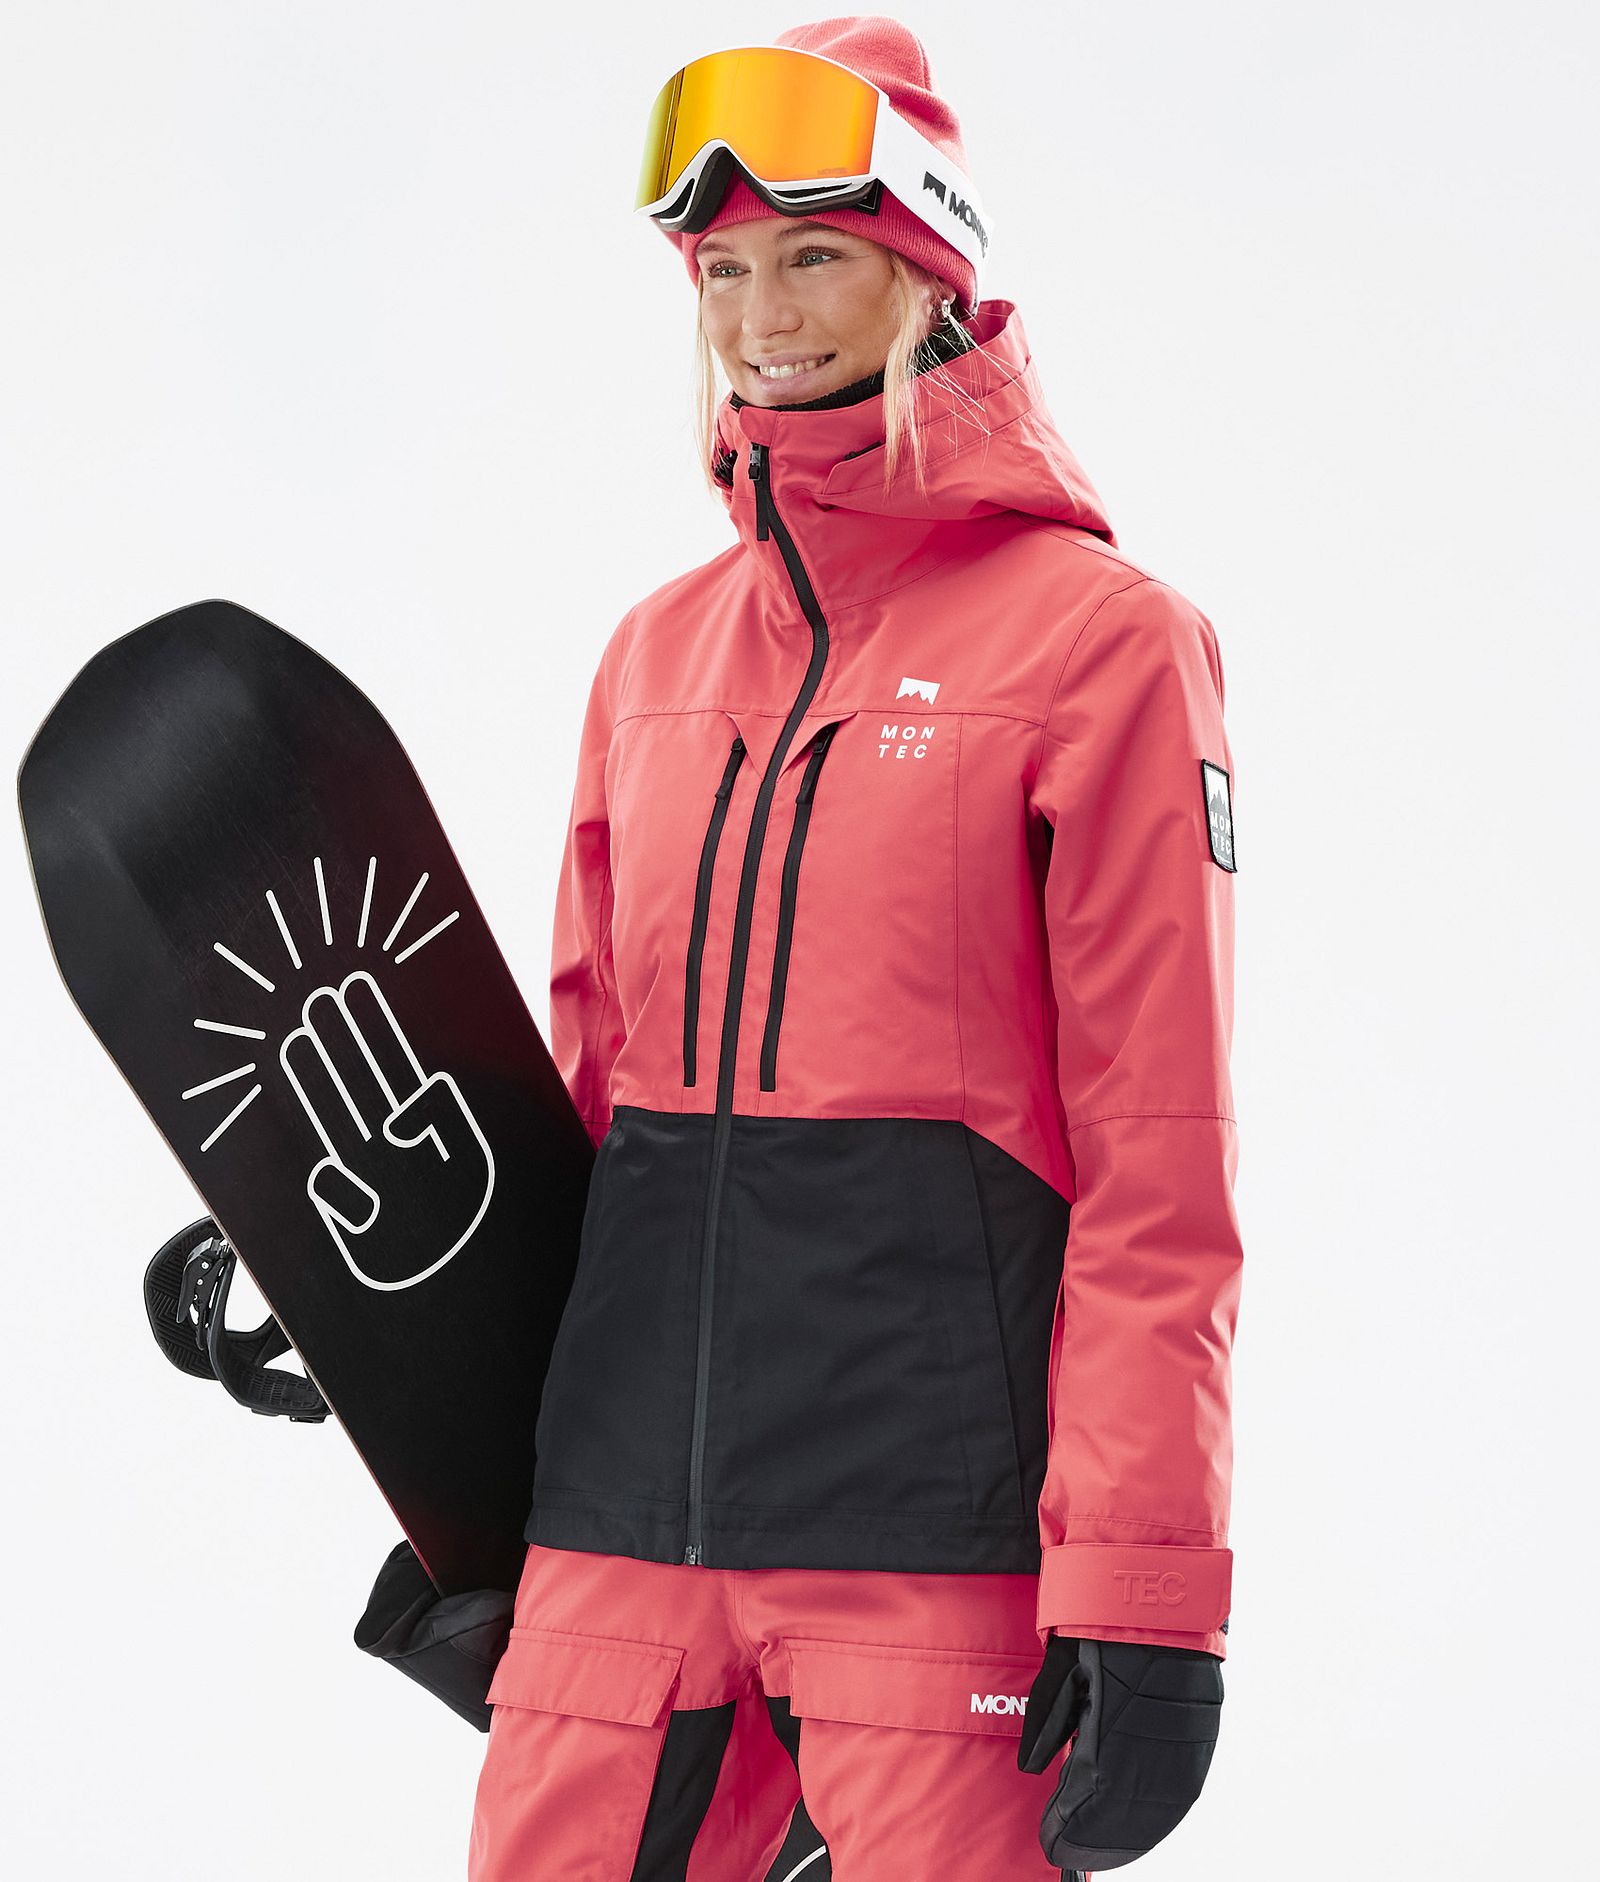 Moss W Veste Snowboard Femme Coral/Black, Image 1 sur 11